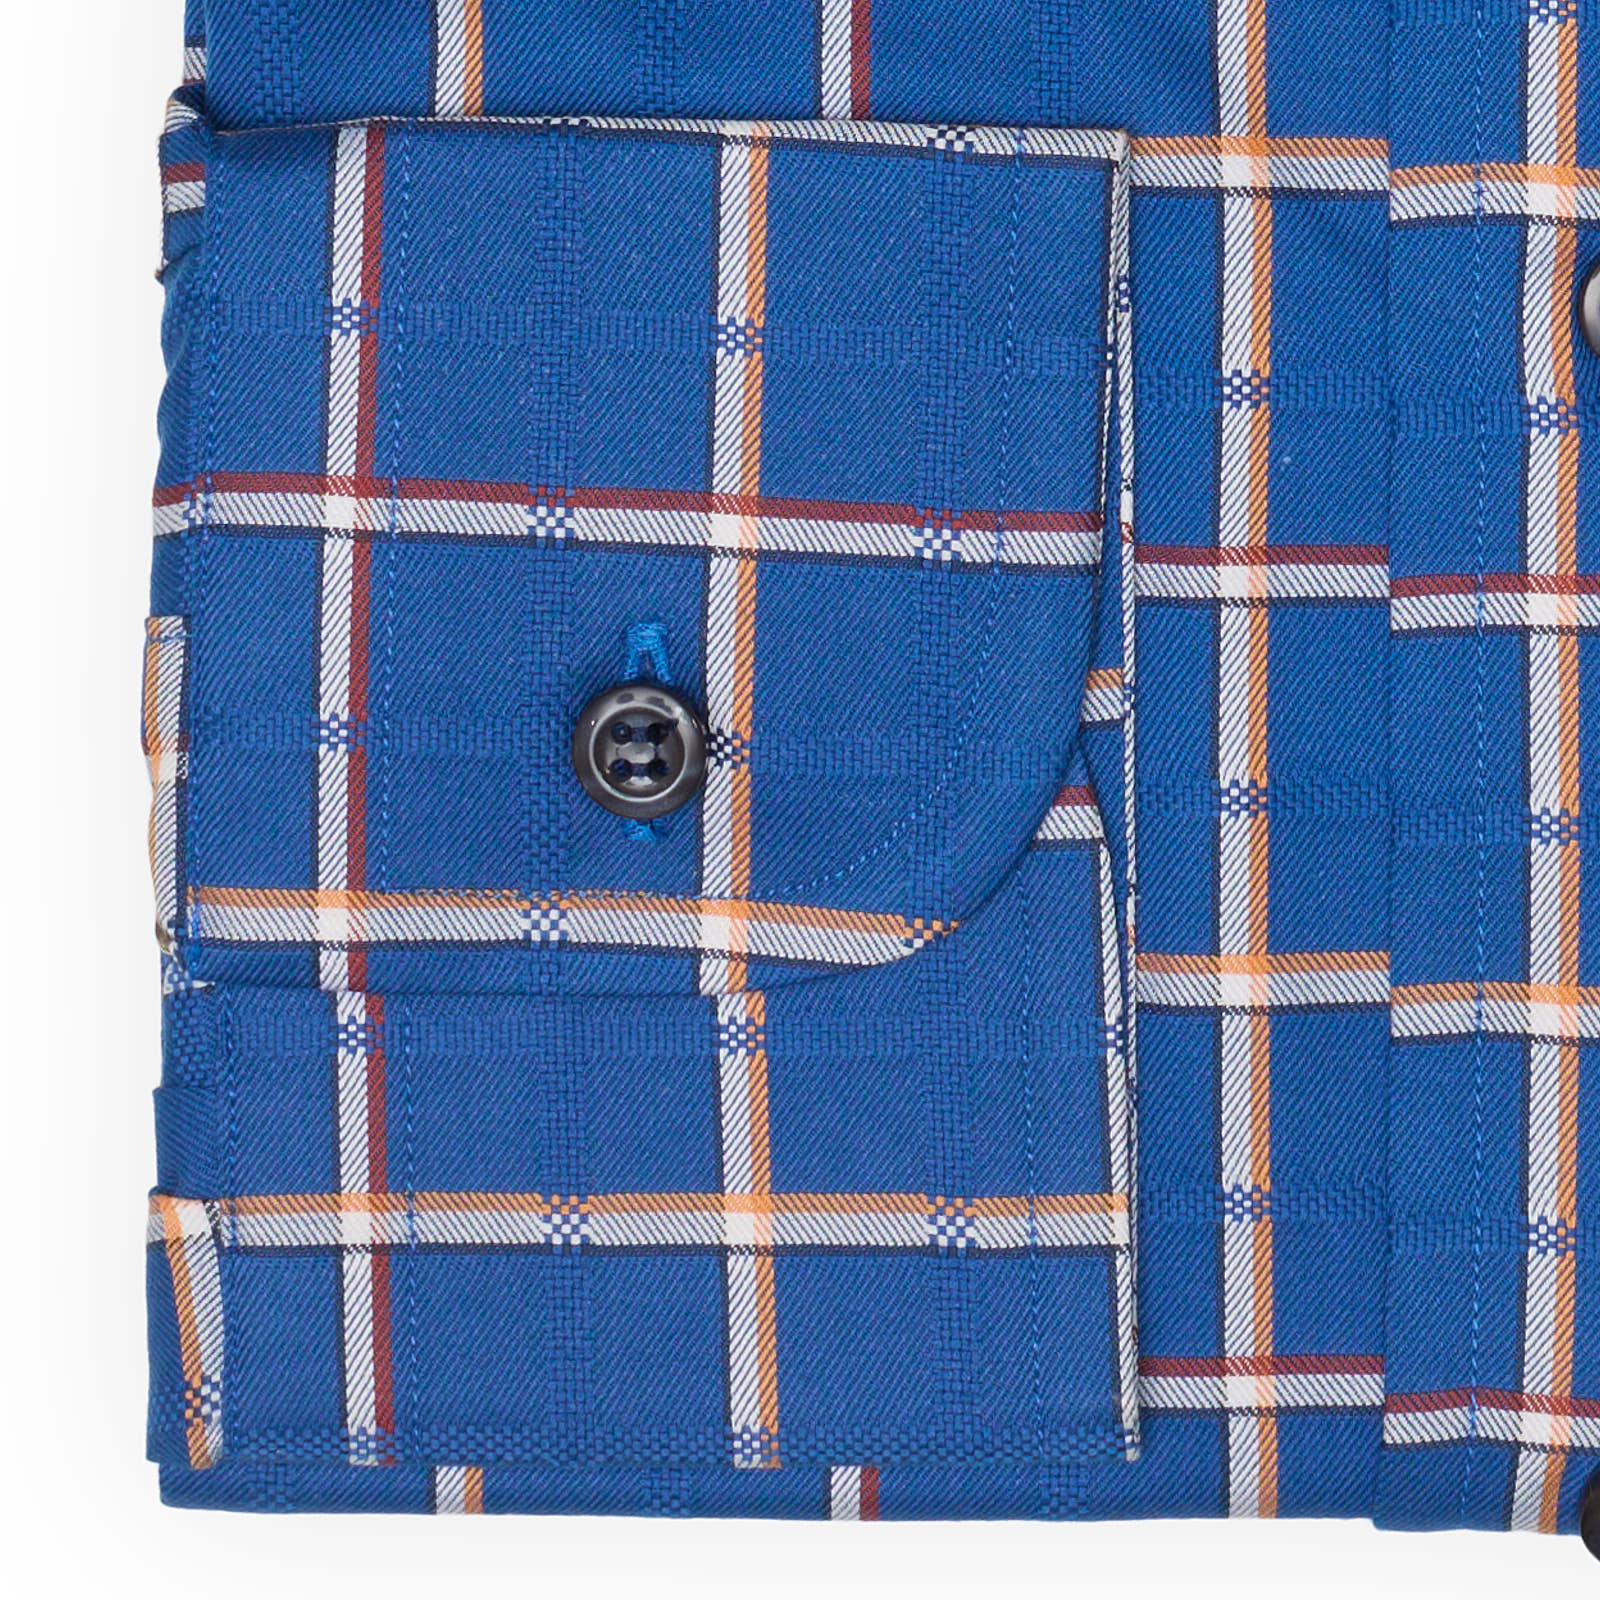 FENICIA Blue Plaid Twill Cotton Shirt EU L NEW US 16